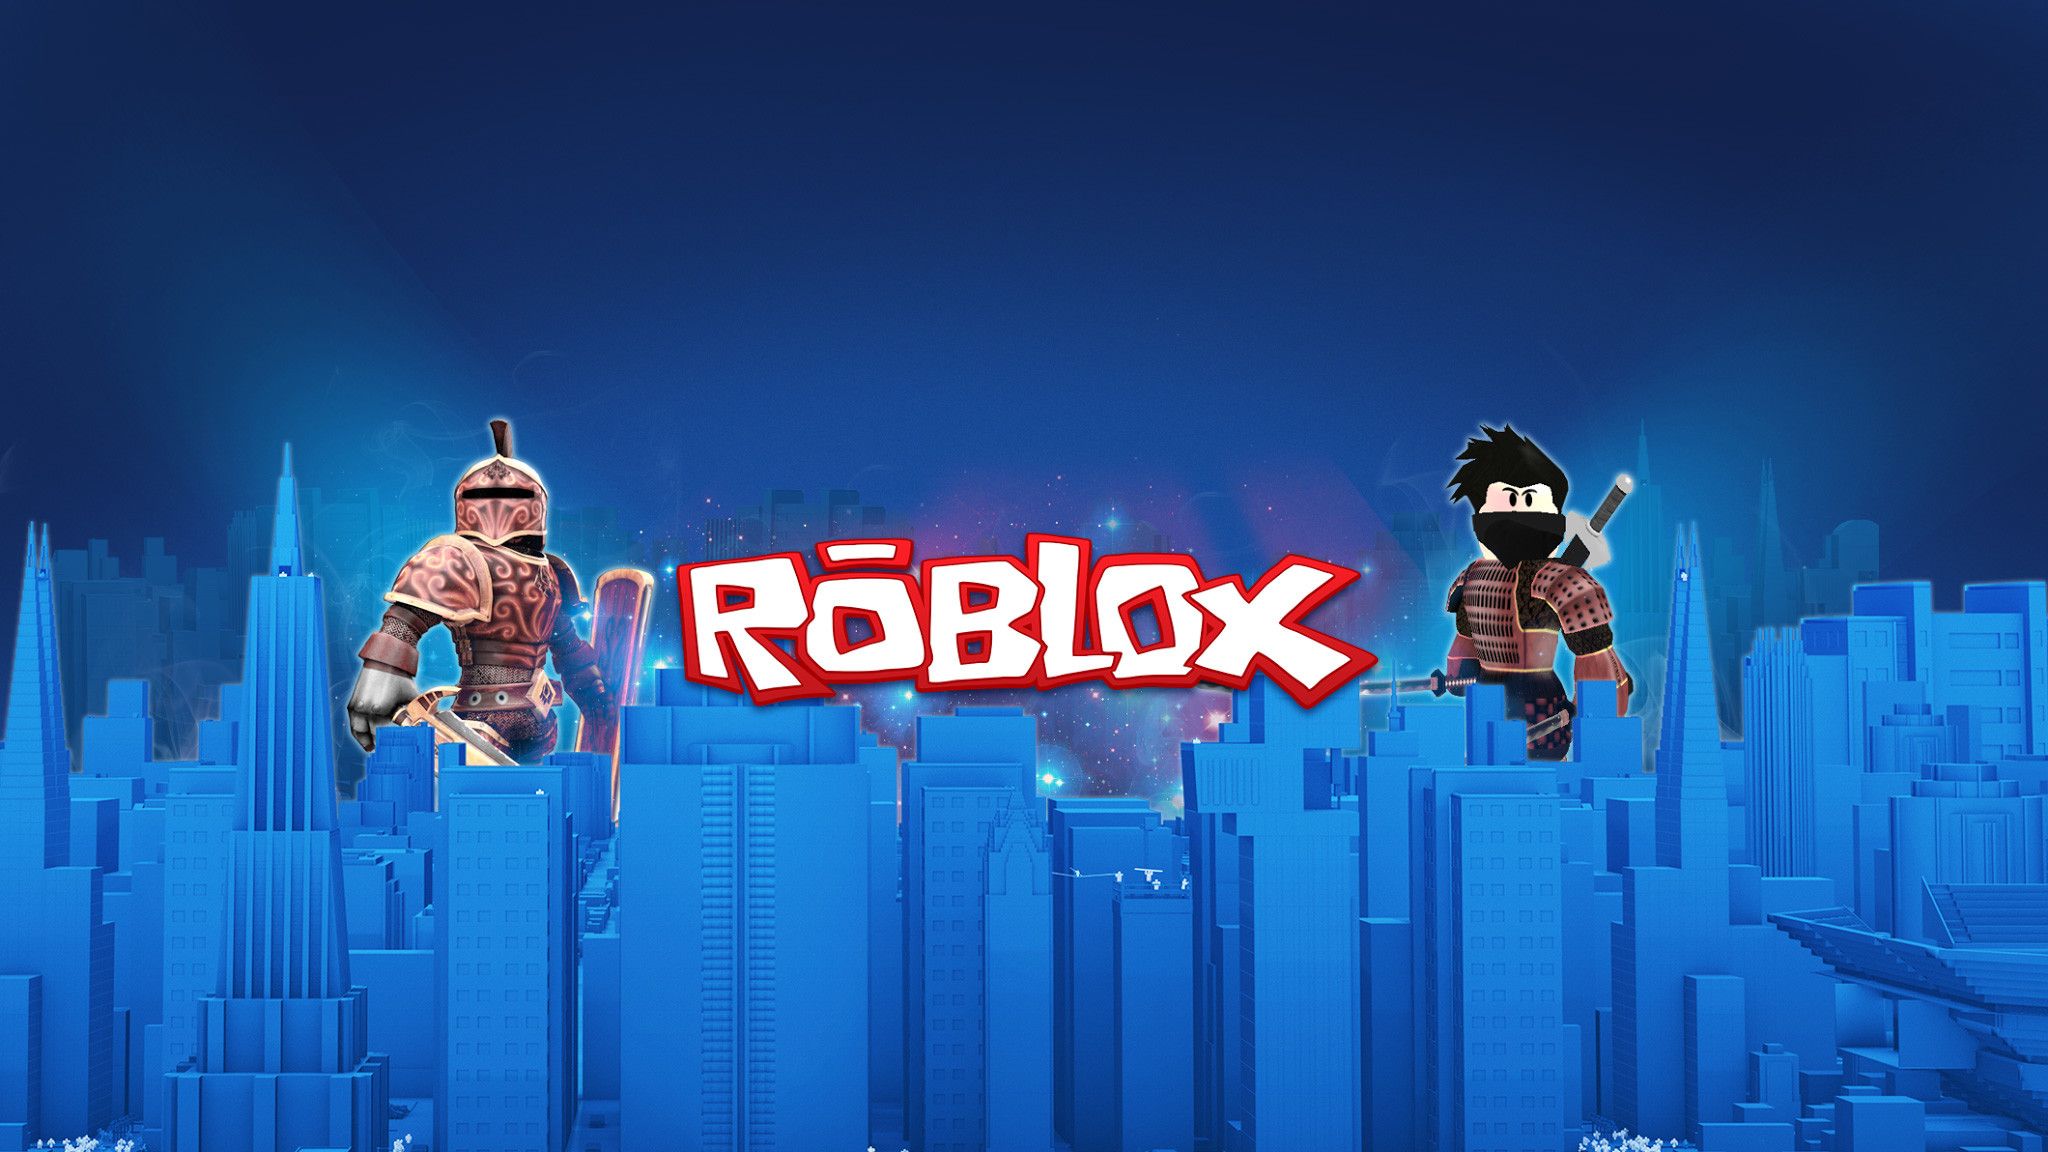 Roblox Wallpaper Hd Kolpaper Awesome Free Hd Wallpapers - cute aesthetic roblox wallpaper logo